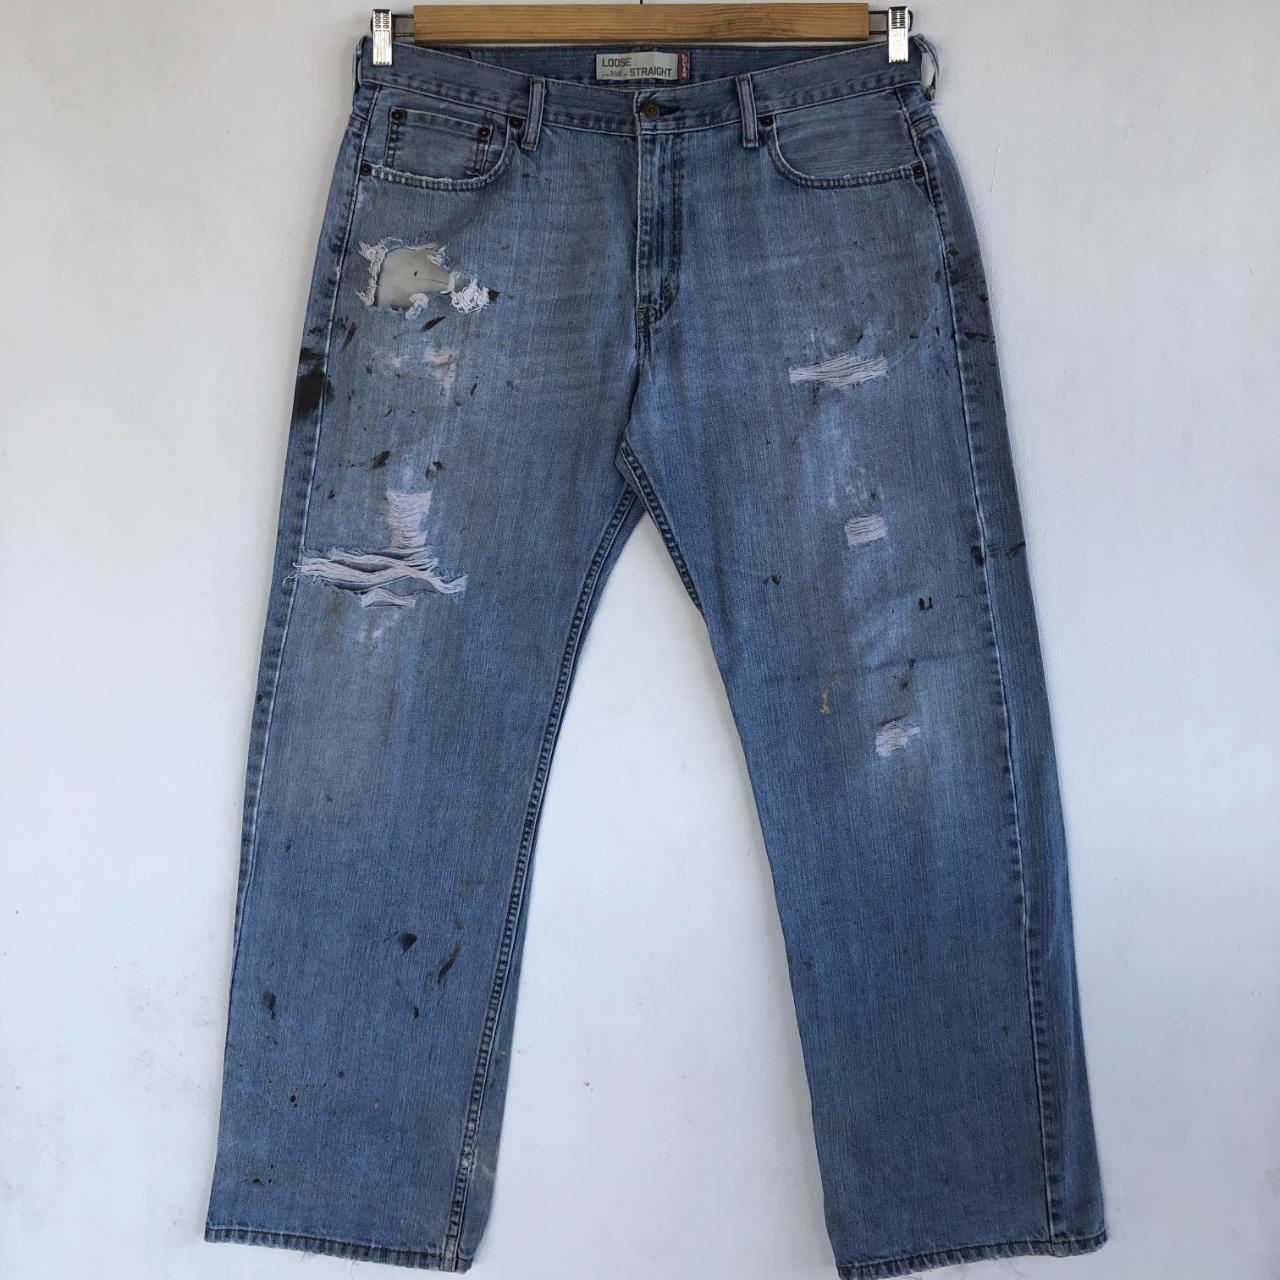 Vintage Levis Jeans Distressed Levis 569 Denim... - Depop